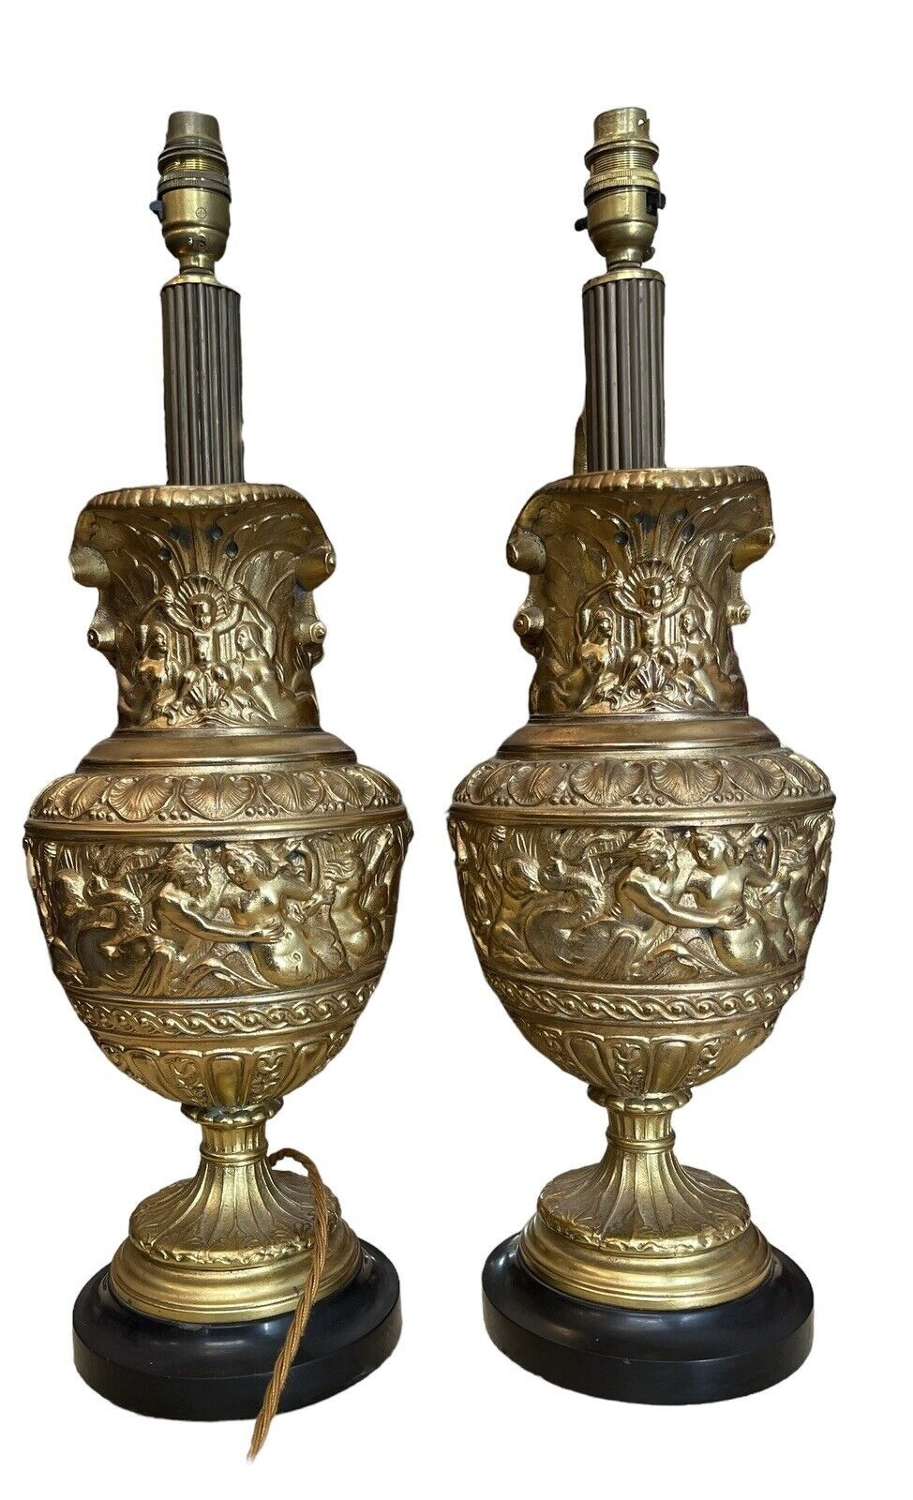 Antique bronze French Ewer Renaissance Revival Cherub lamps circa 1940